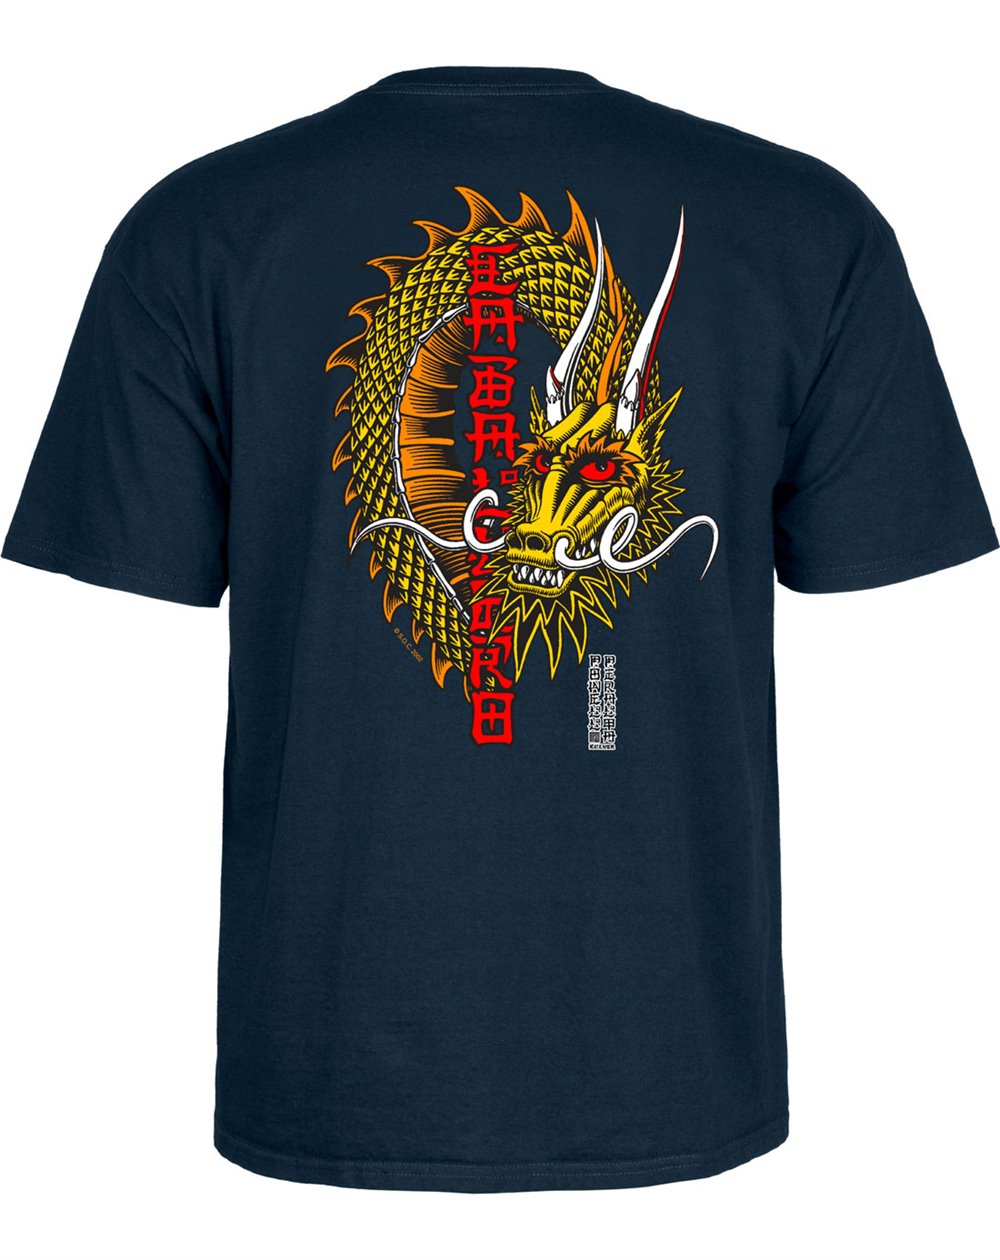 Powell Peralta Camiseta Hombre Steve Caballero Ban This Dragon (Navy)